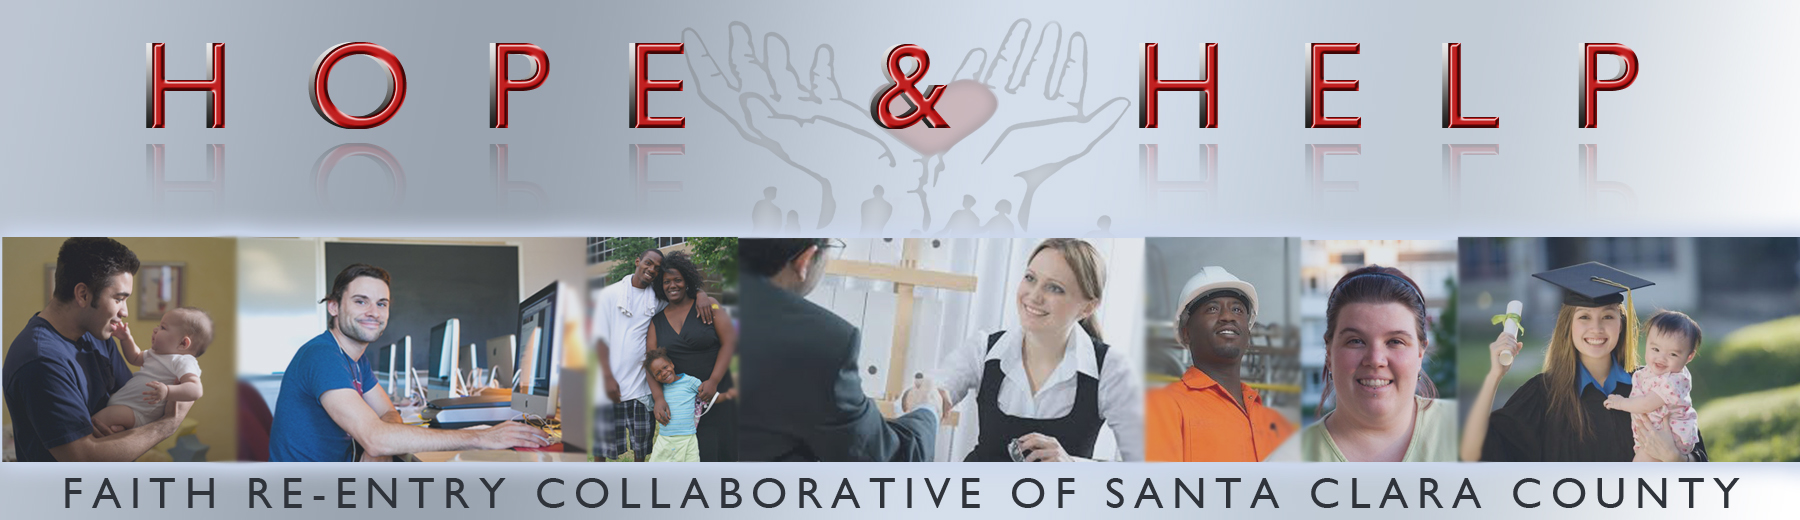 Hope & Help, Faith Re-entry Collaborative of Santa Clara County